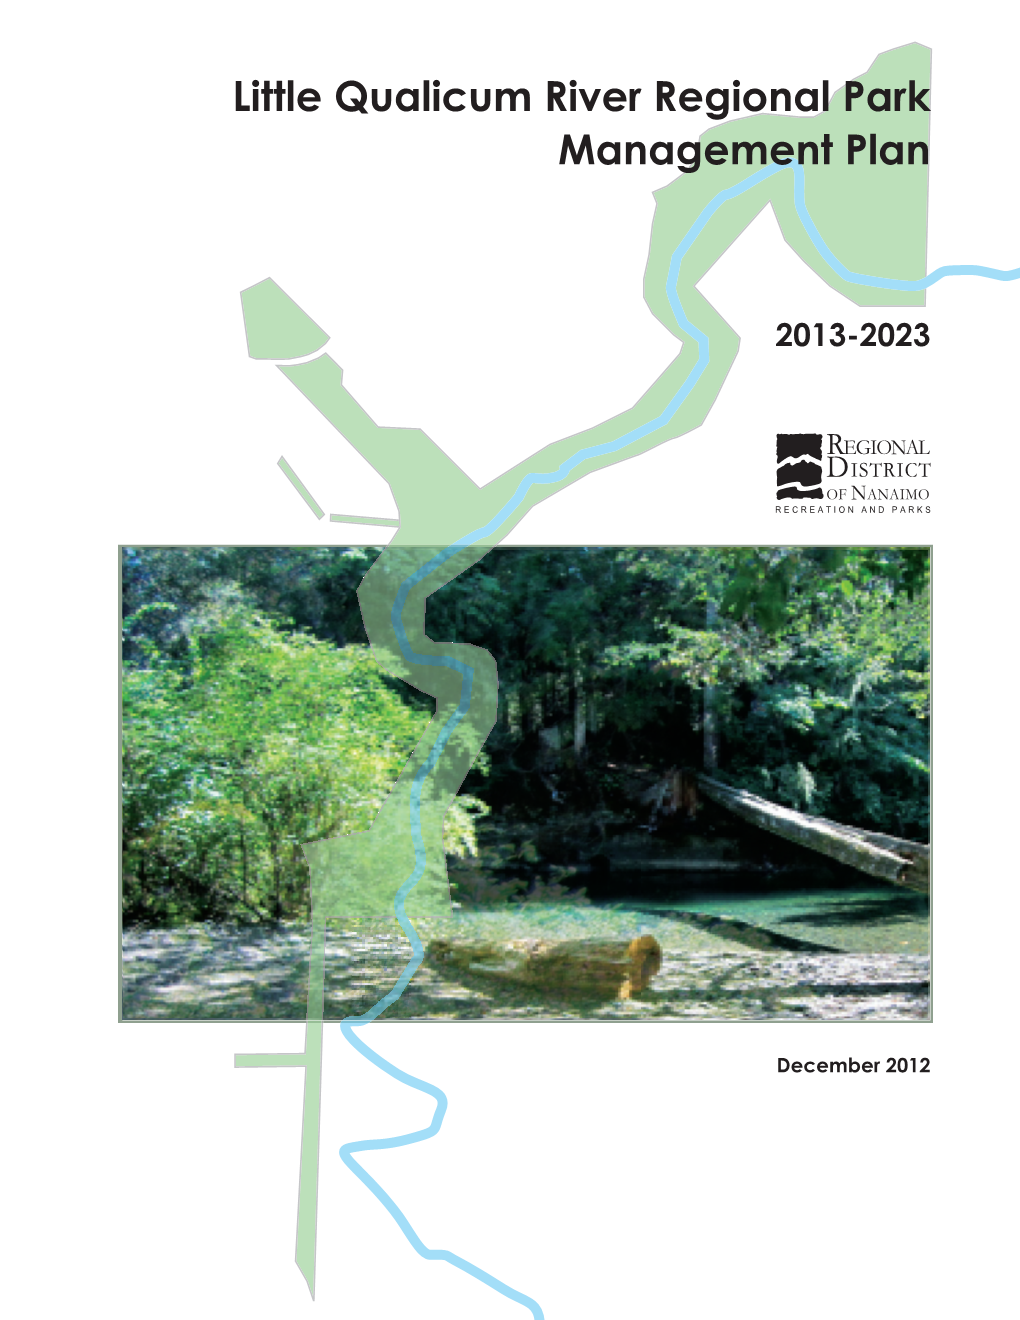 Little Qualicum River Regional Park Management Plan